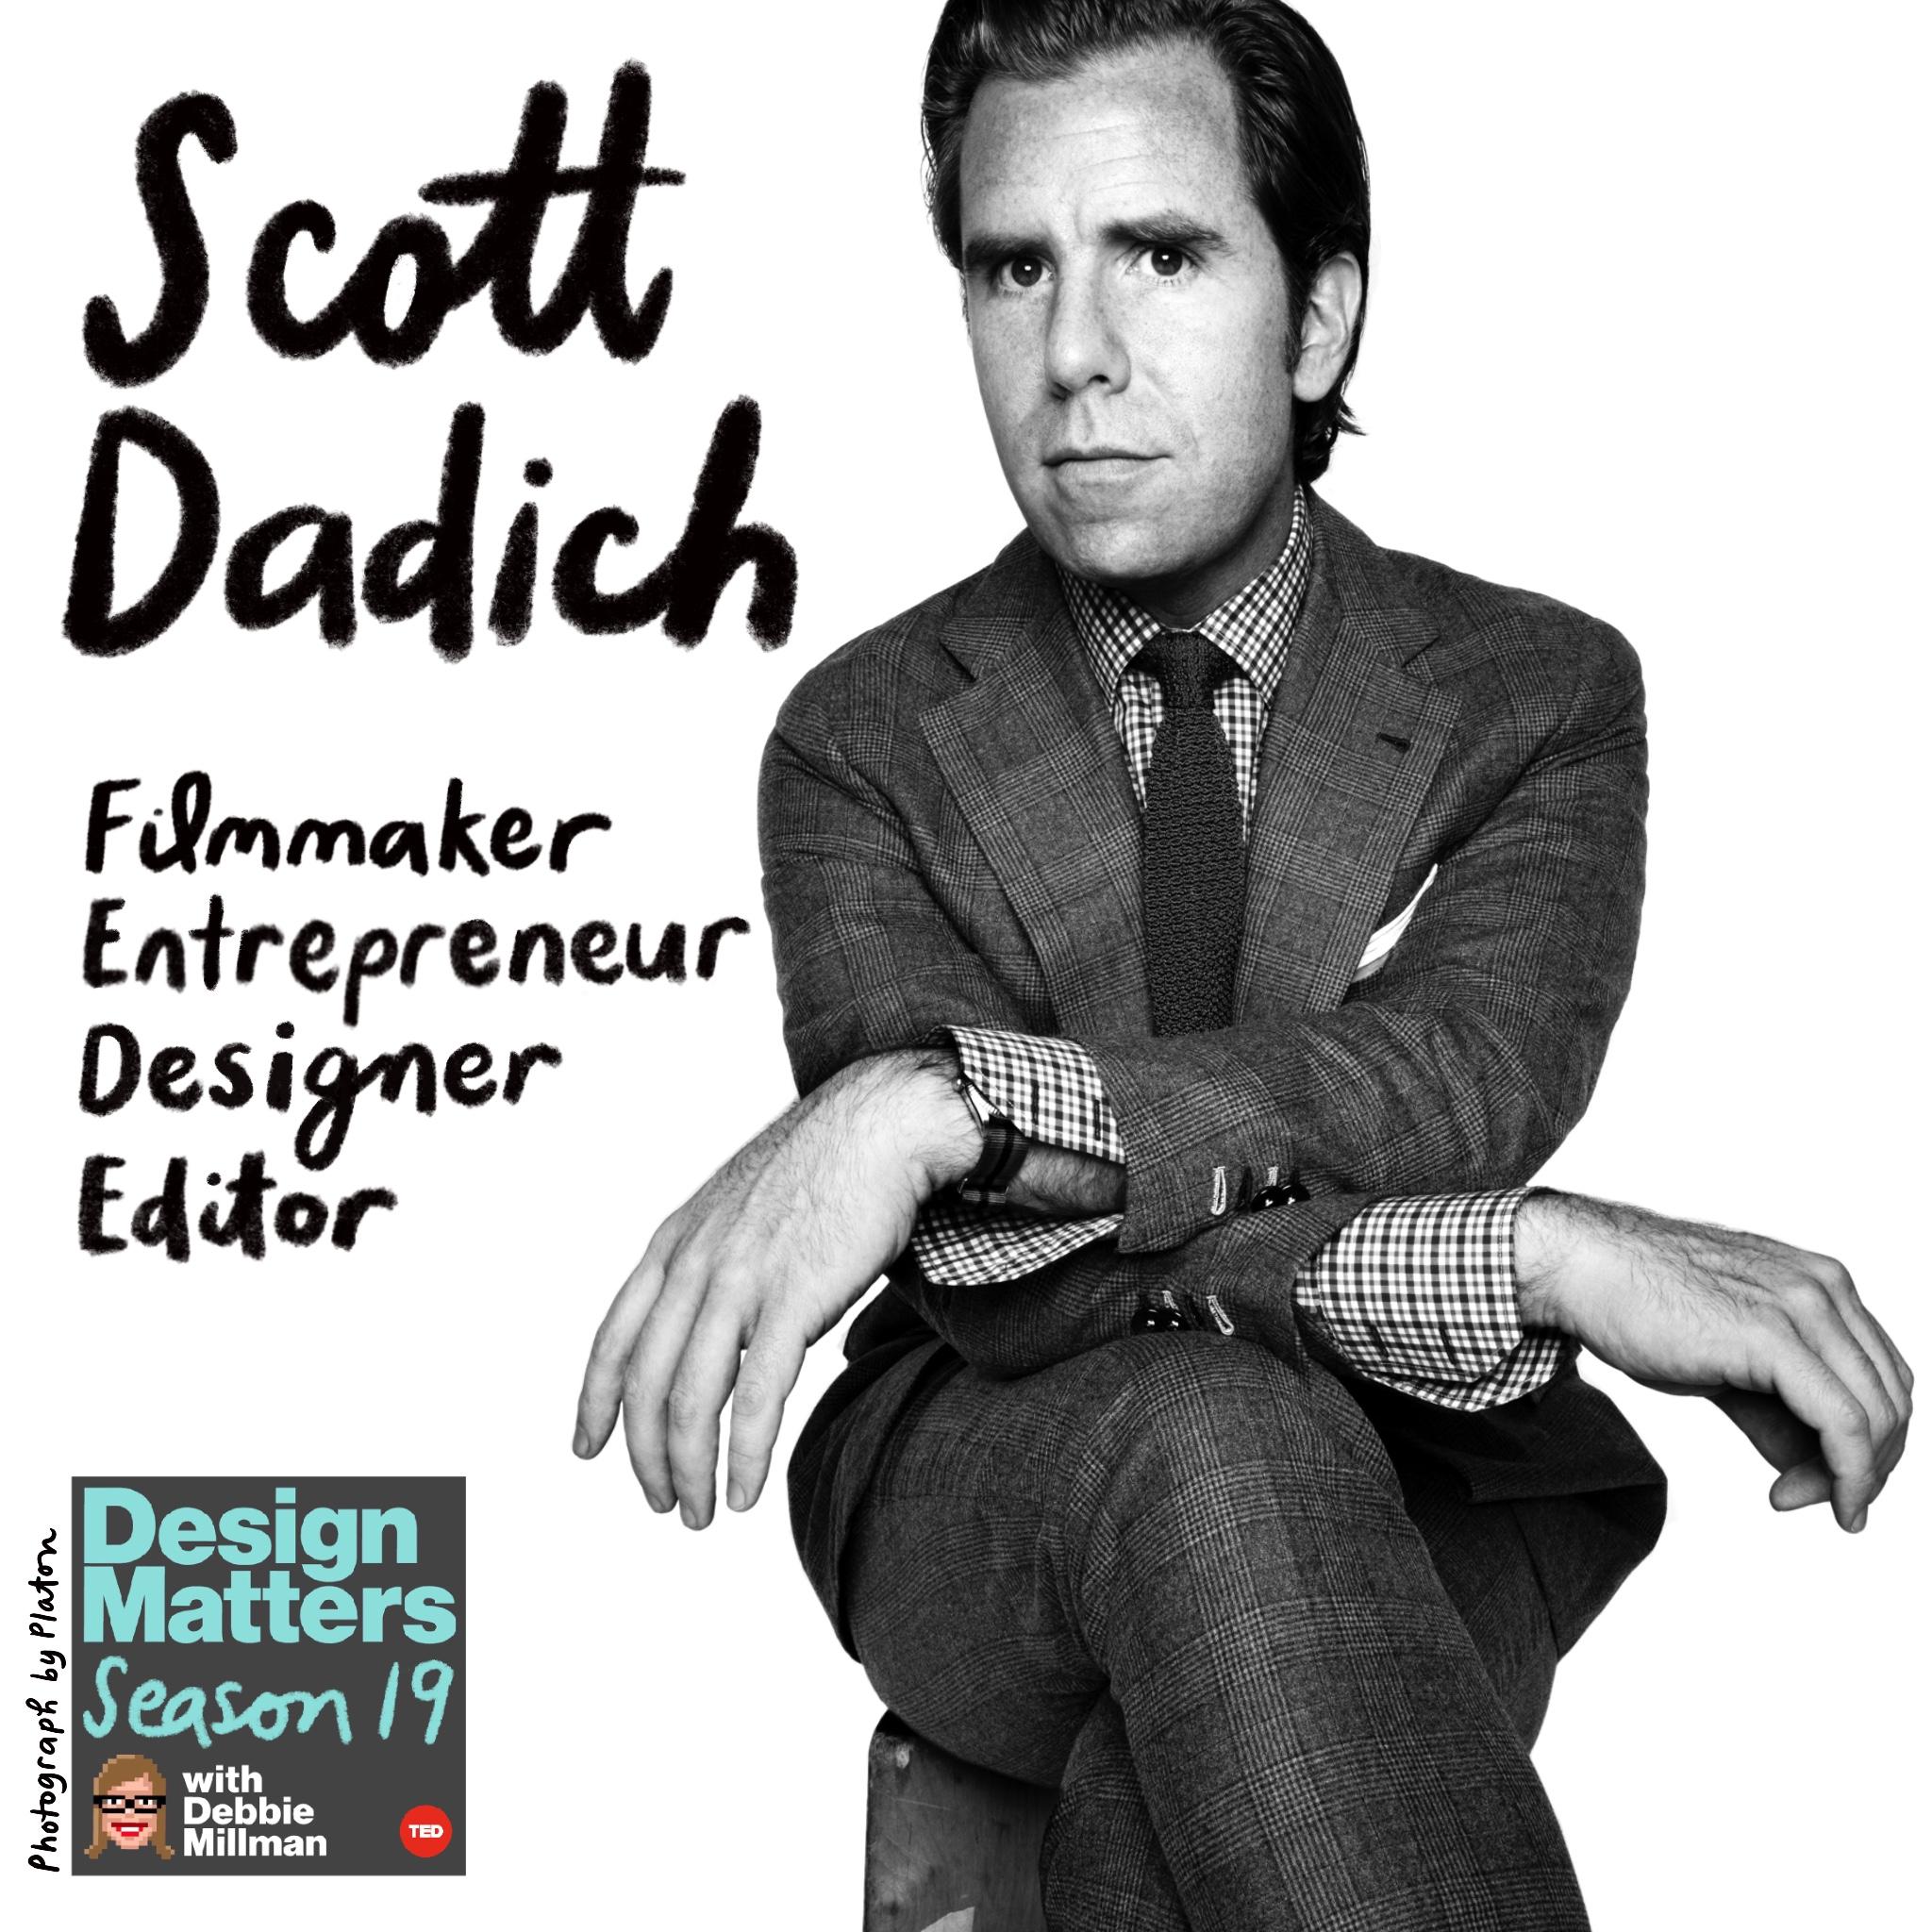 Thumbnail for "Scott Dadich".